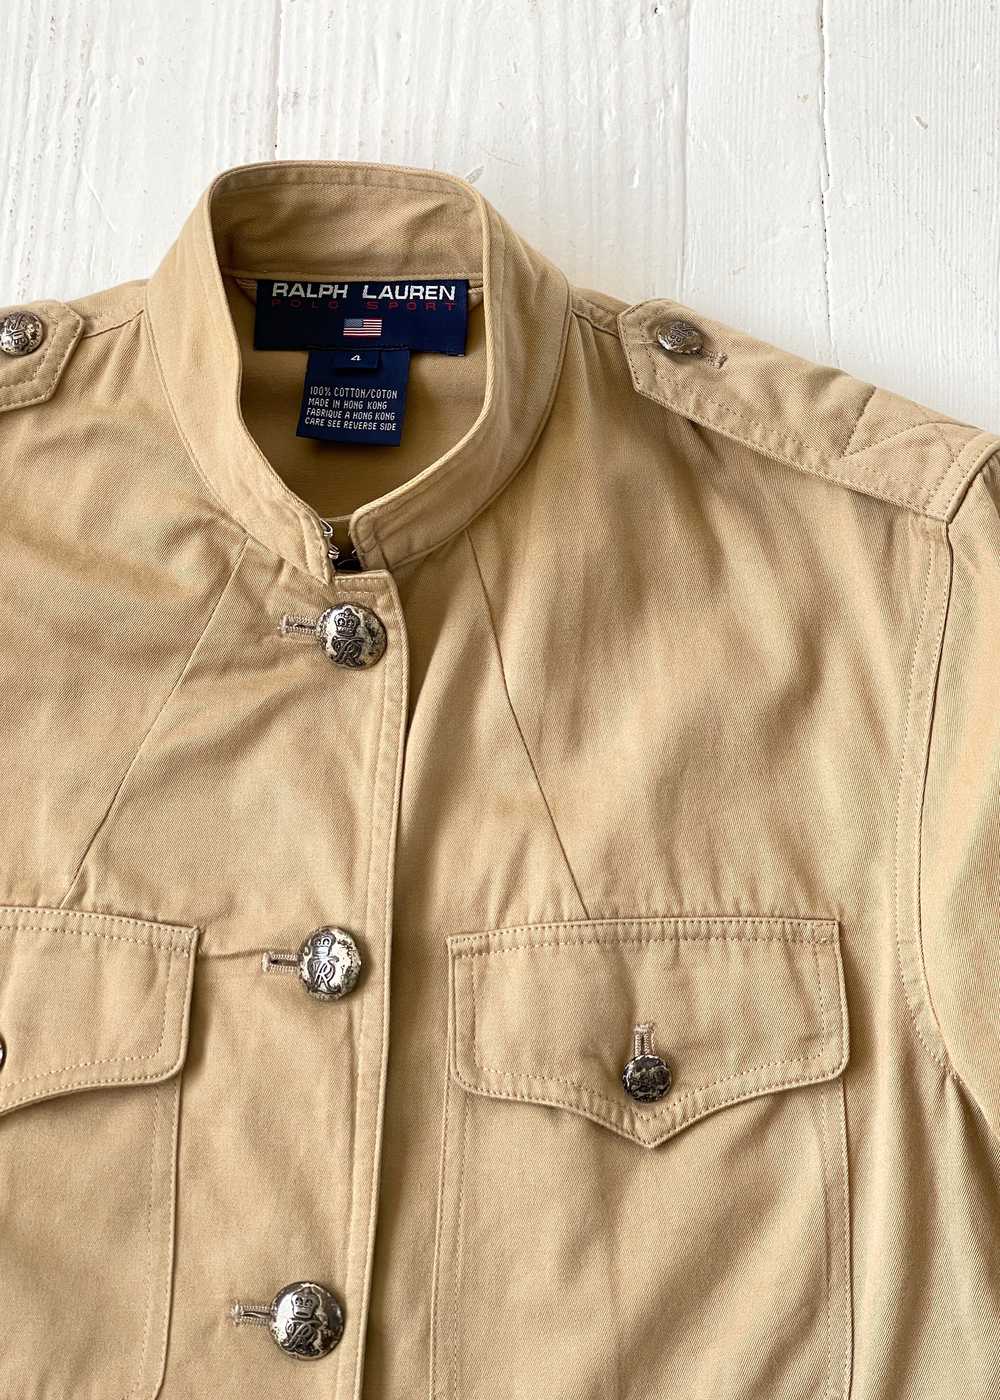 Vintage 1990s Ralph Lauren Military Style Jacket - image 2